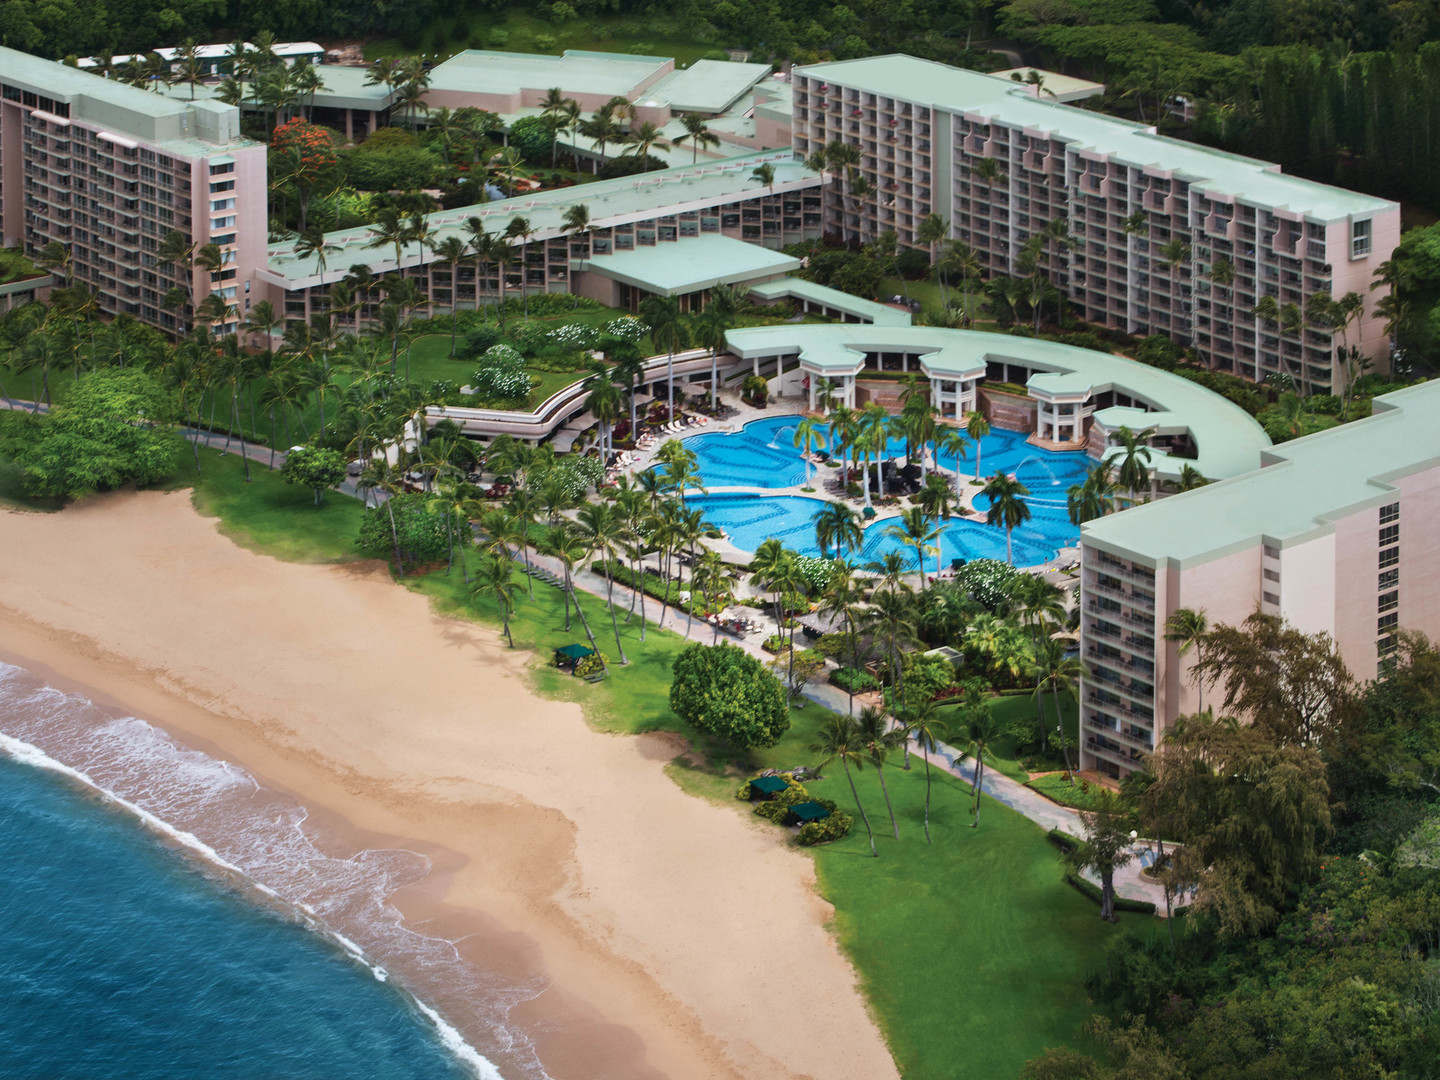 Marriott's Kaua‘i Beach Club Aerial View of Resort/Beach. Marriott's Kaua‘i Beach Club is located in Līhuʻe, Kaua‘i, Hawai‘i United States.